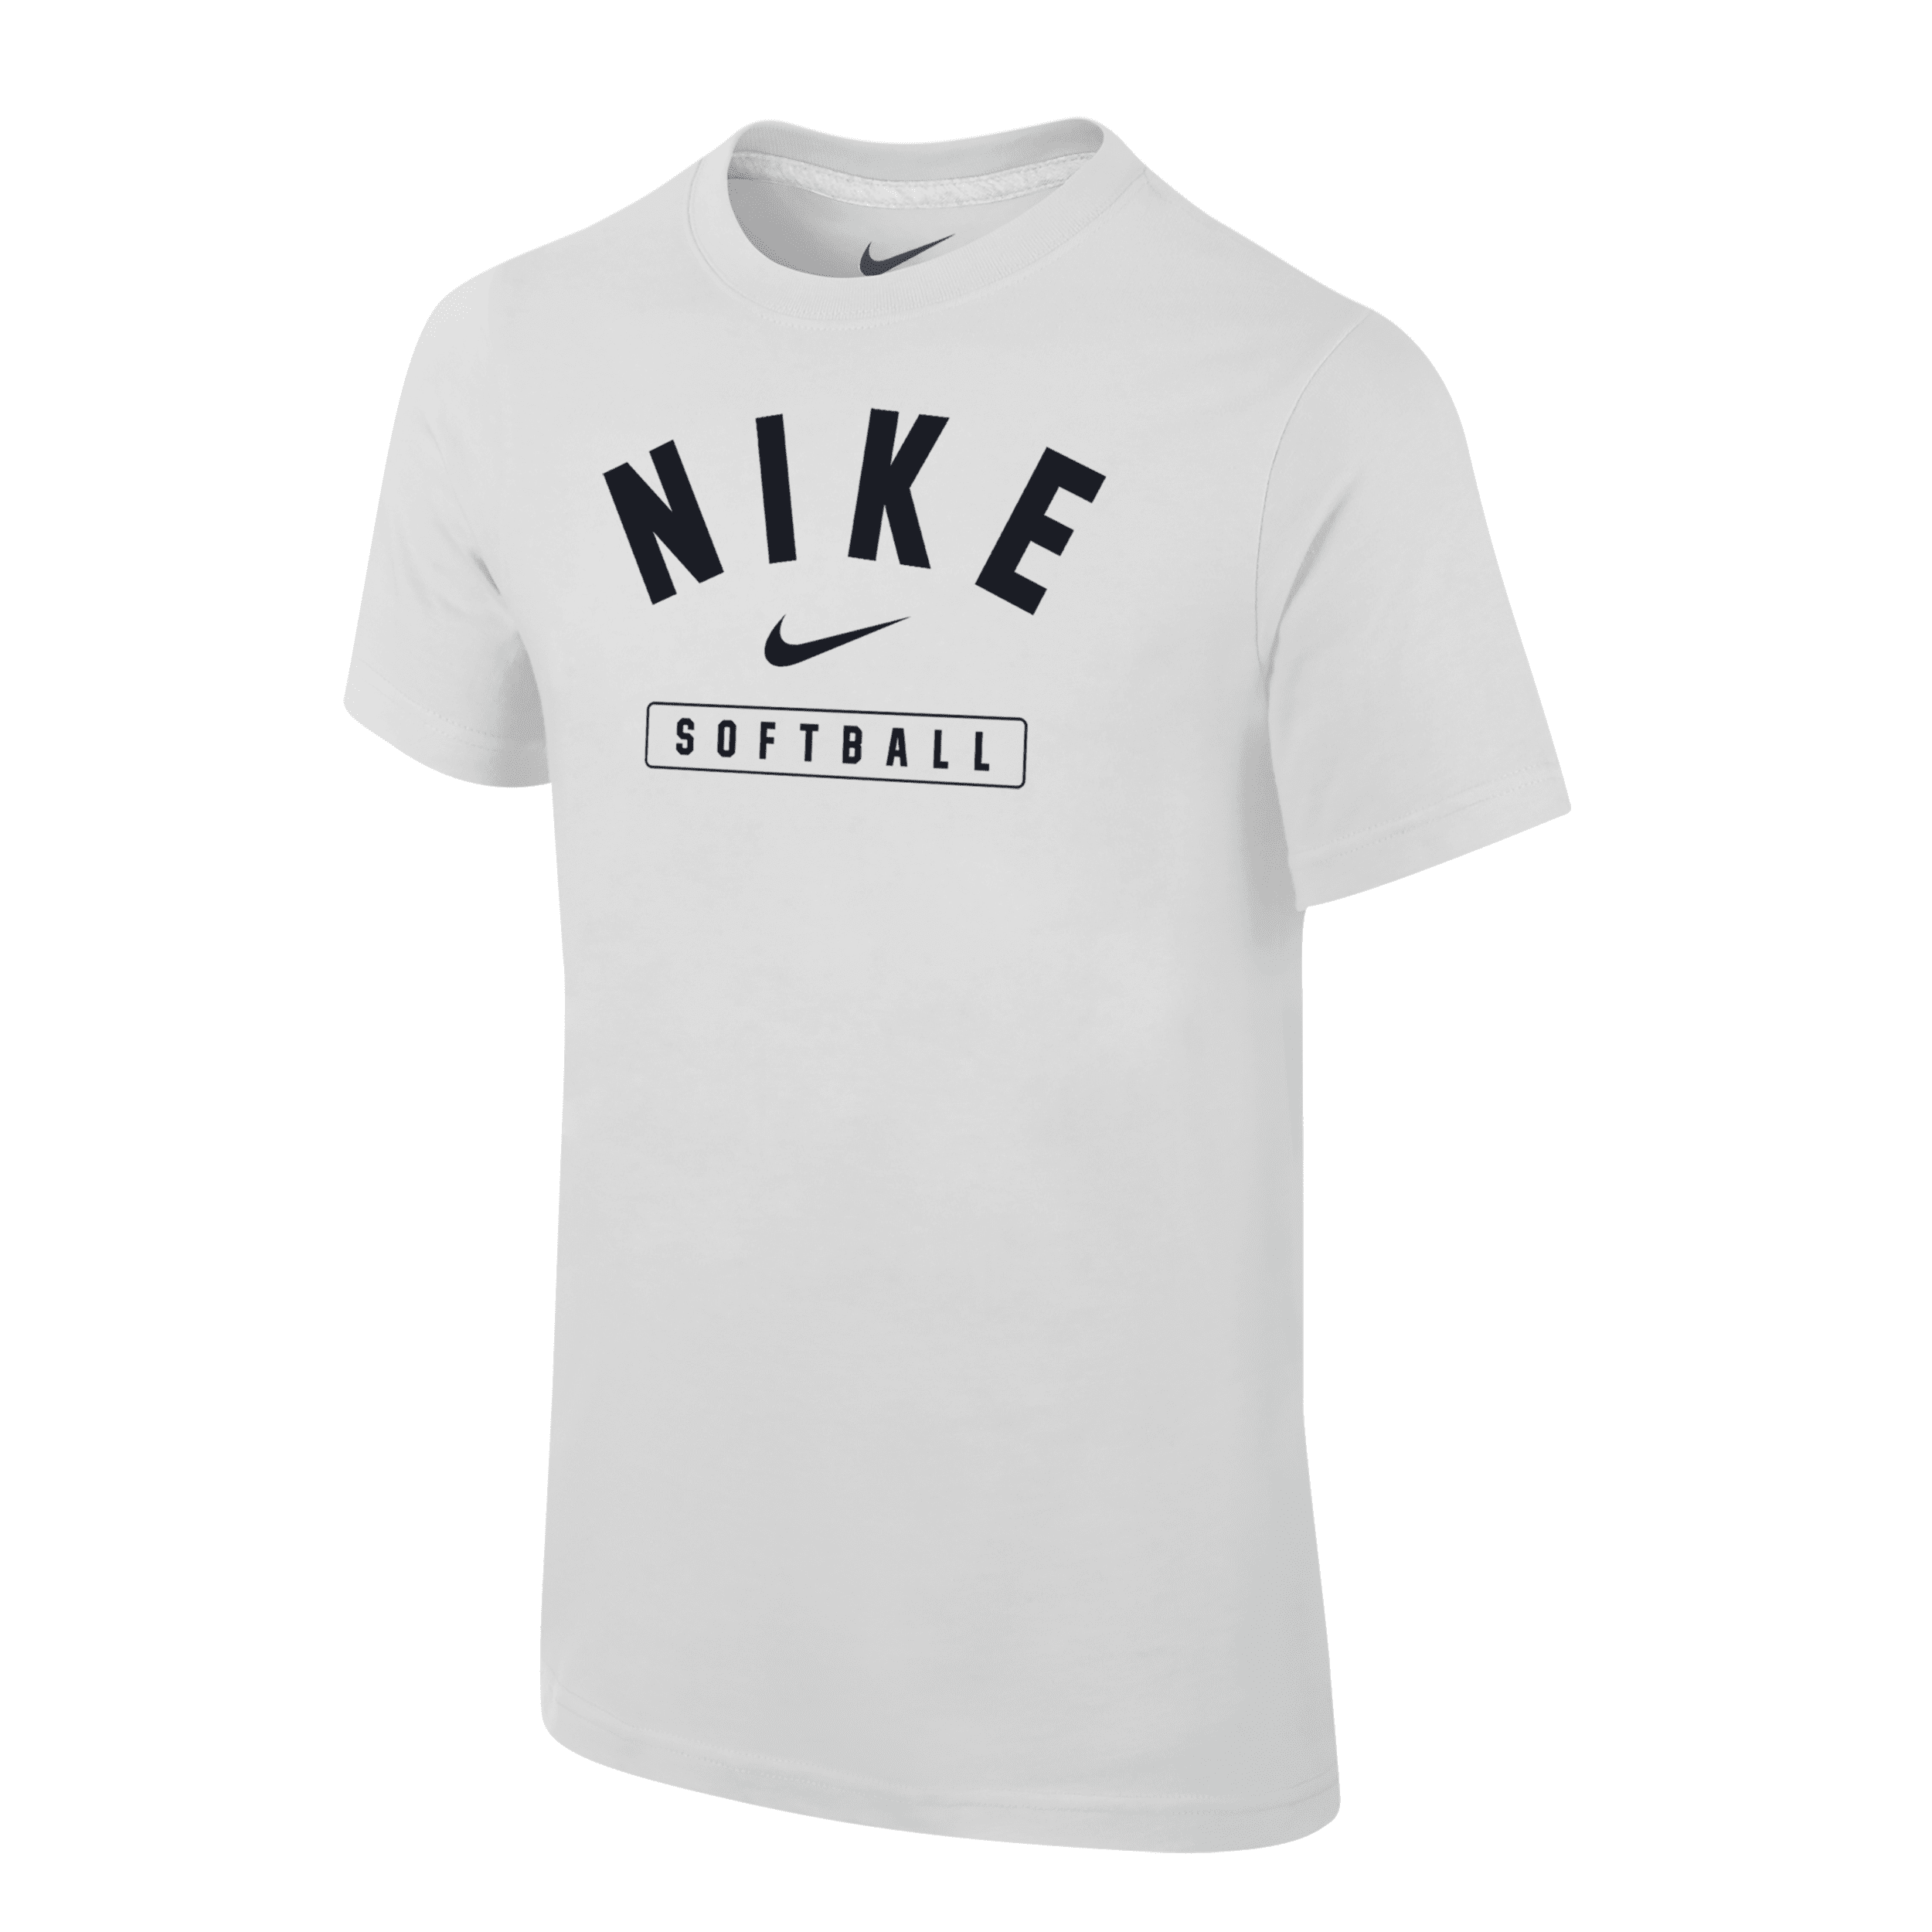 Nike Big Kids' Softball T-shirt In White